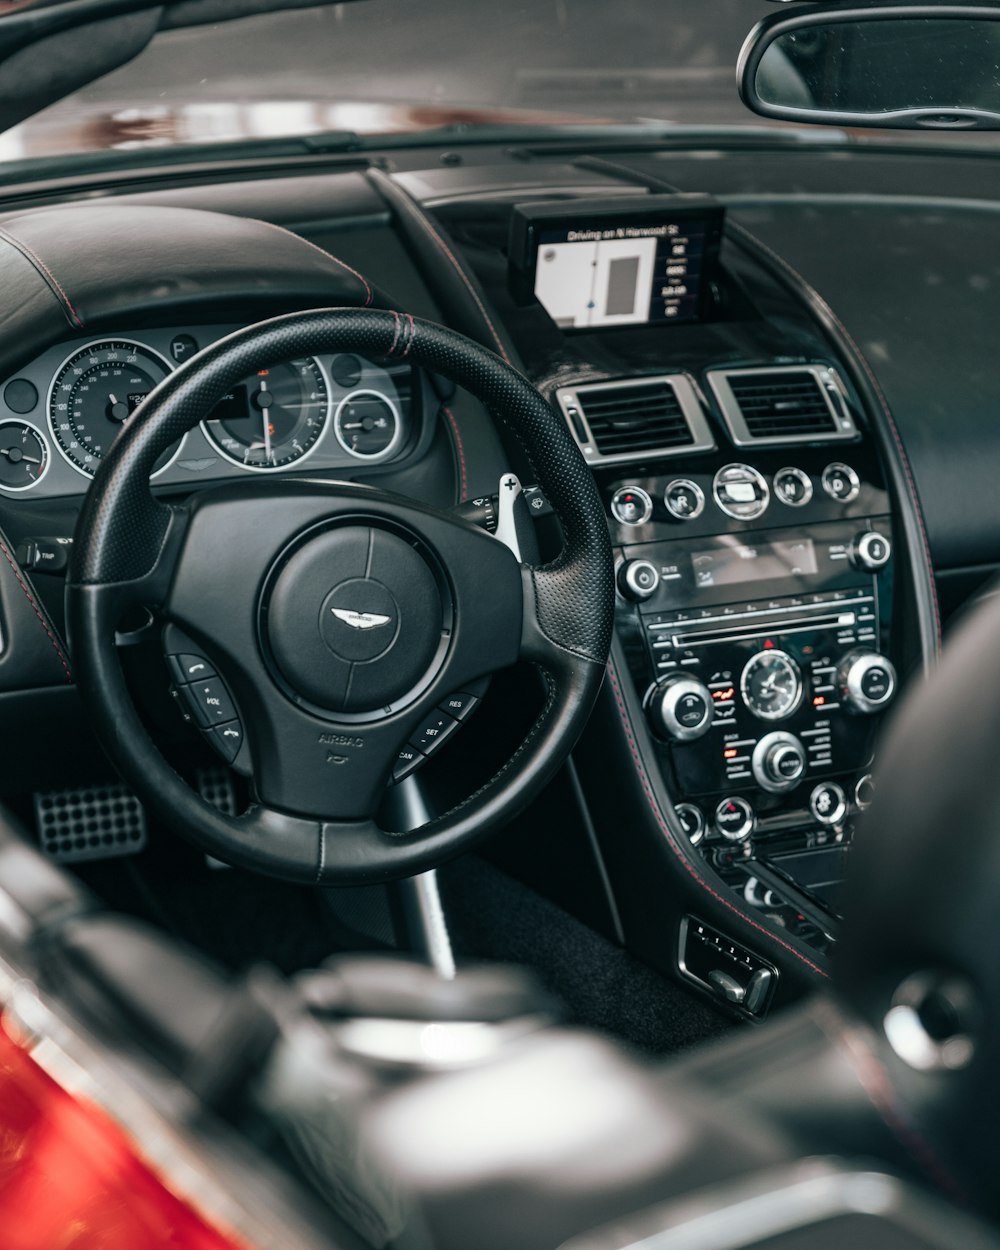 Black Aston Martin Steering Wheel Photo Free Car Image On Unsplash